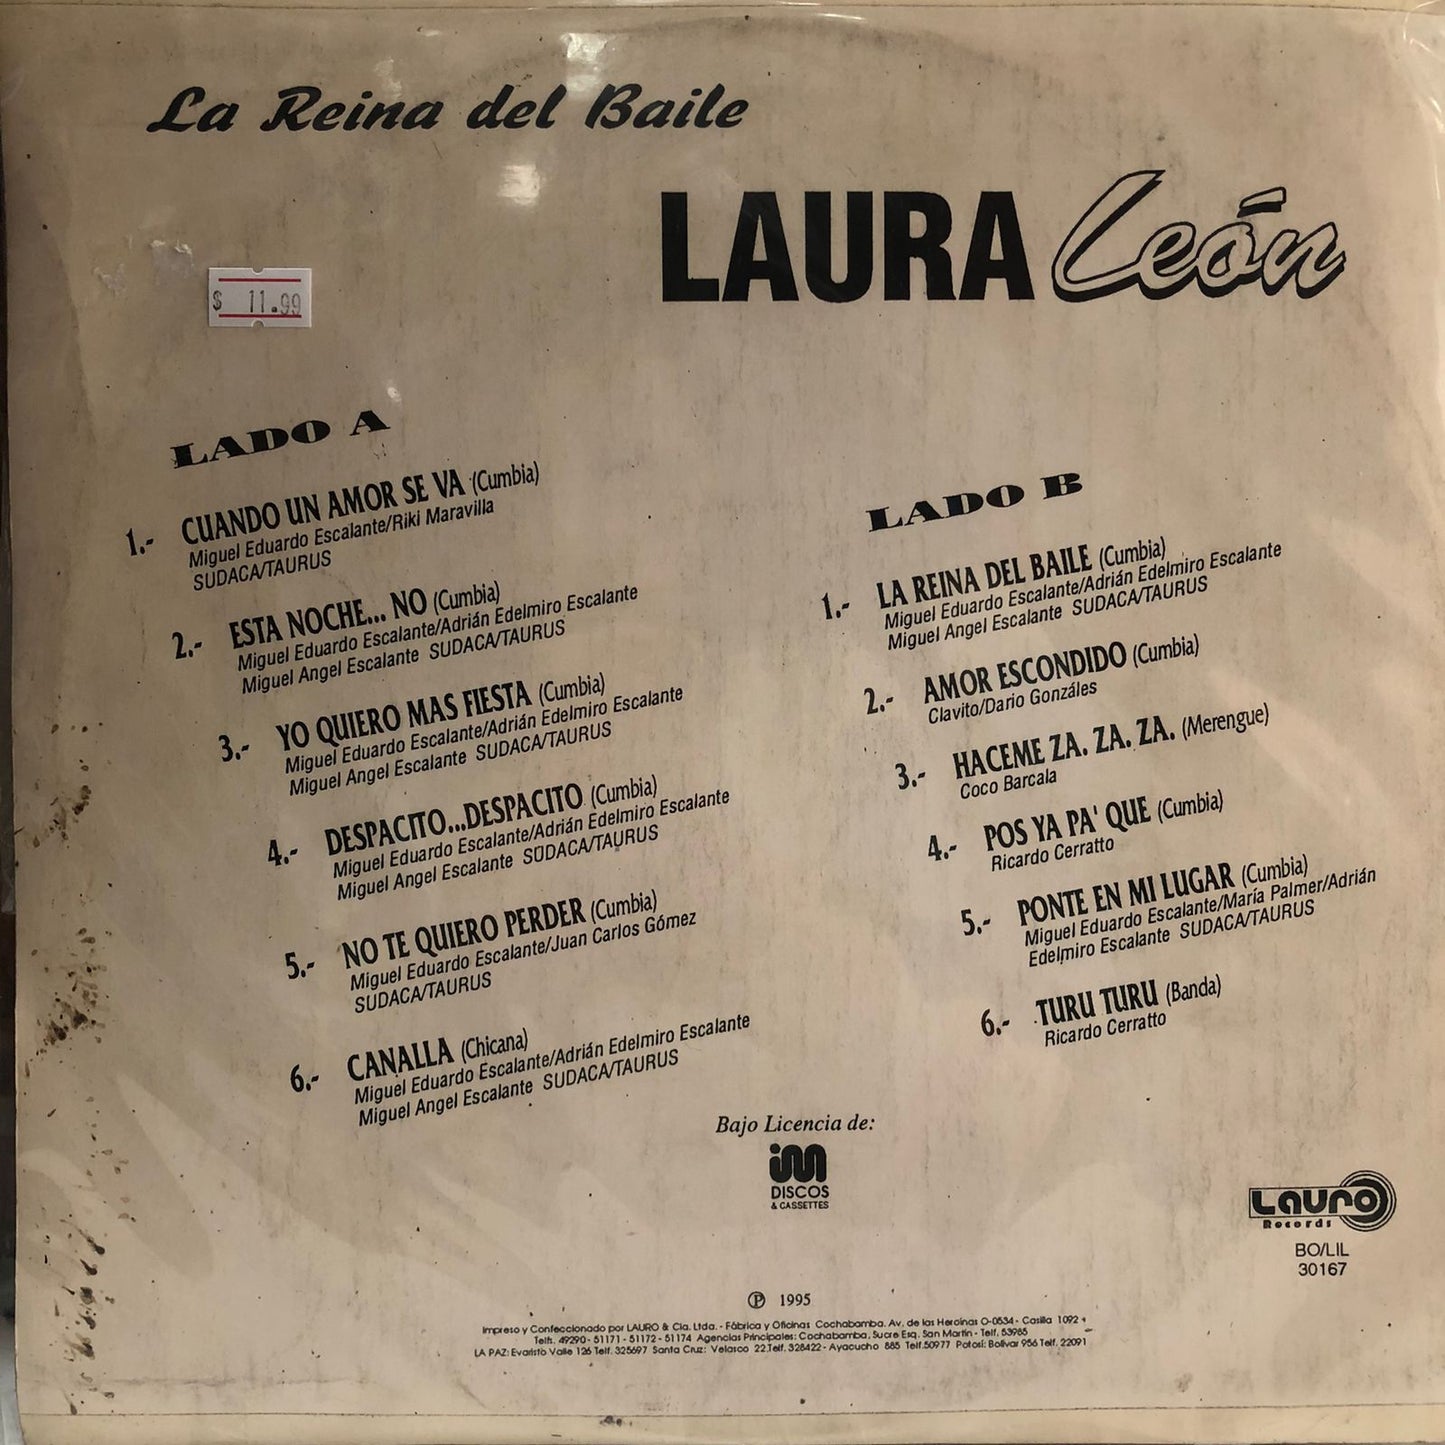 LAURA LEON - LA REINA DEL BAILE  LP